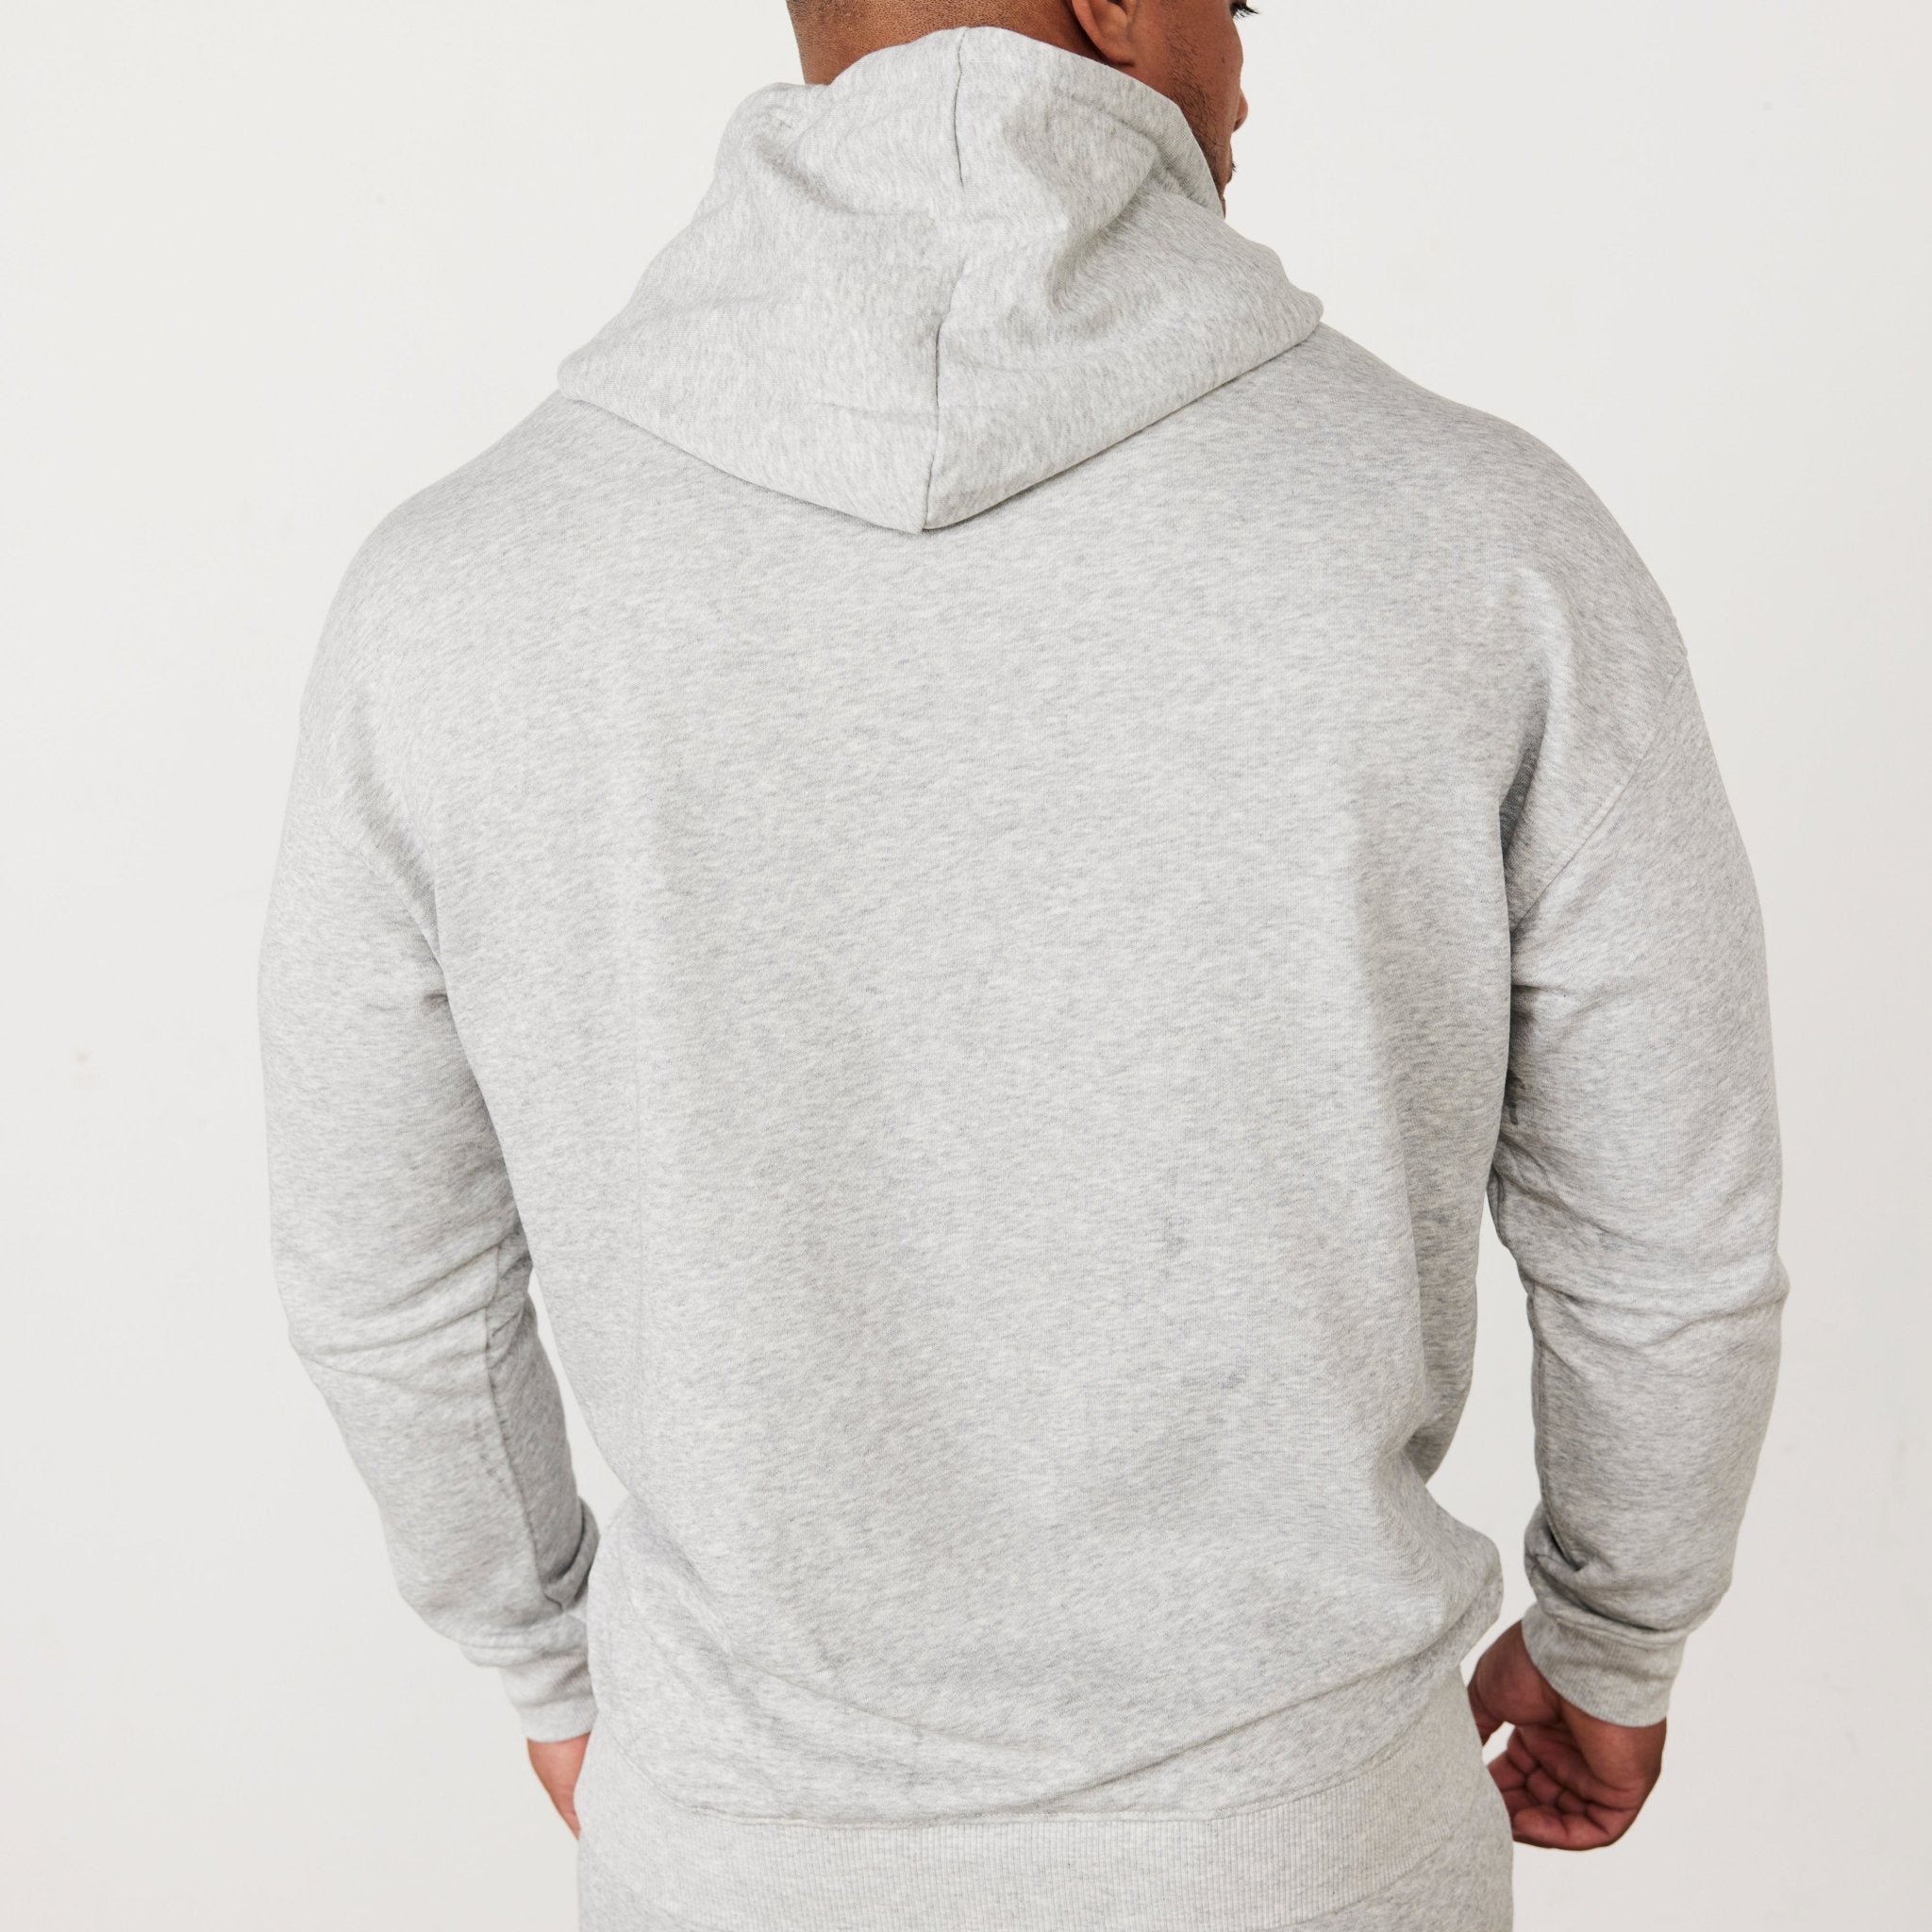 Vanquish Essential Grey Oversized Pullover Hoodie - Vanquish Fitness